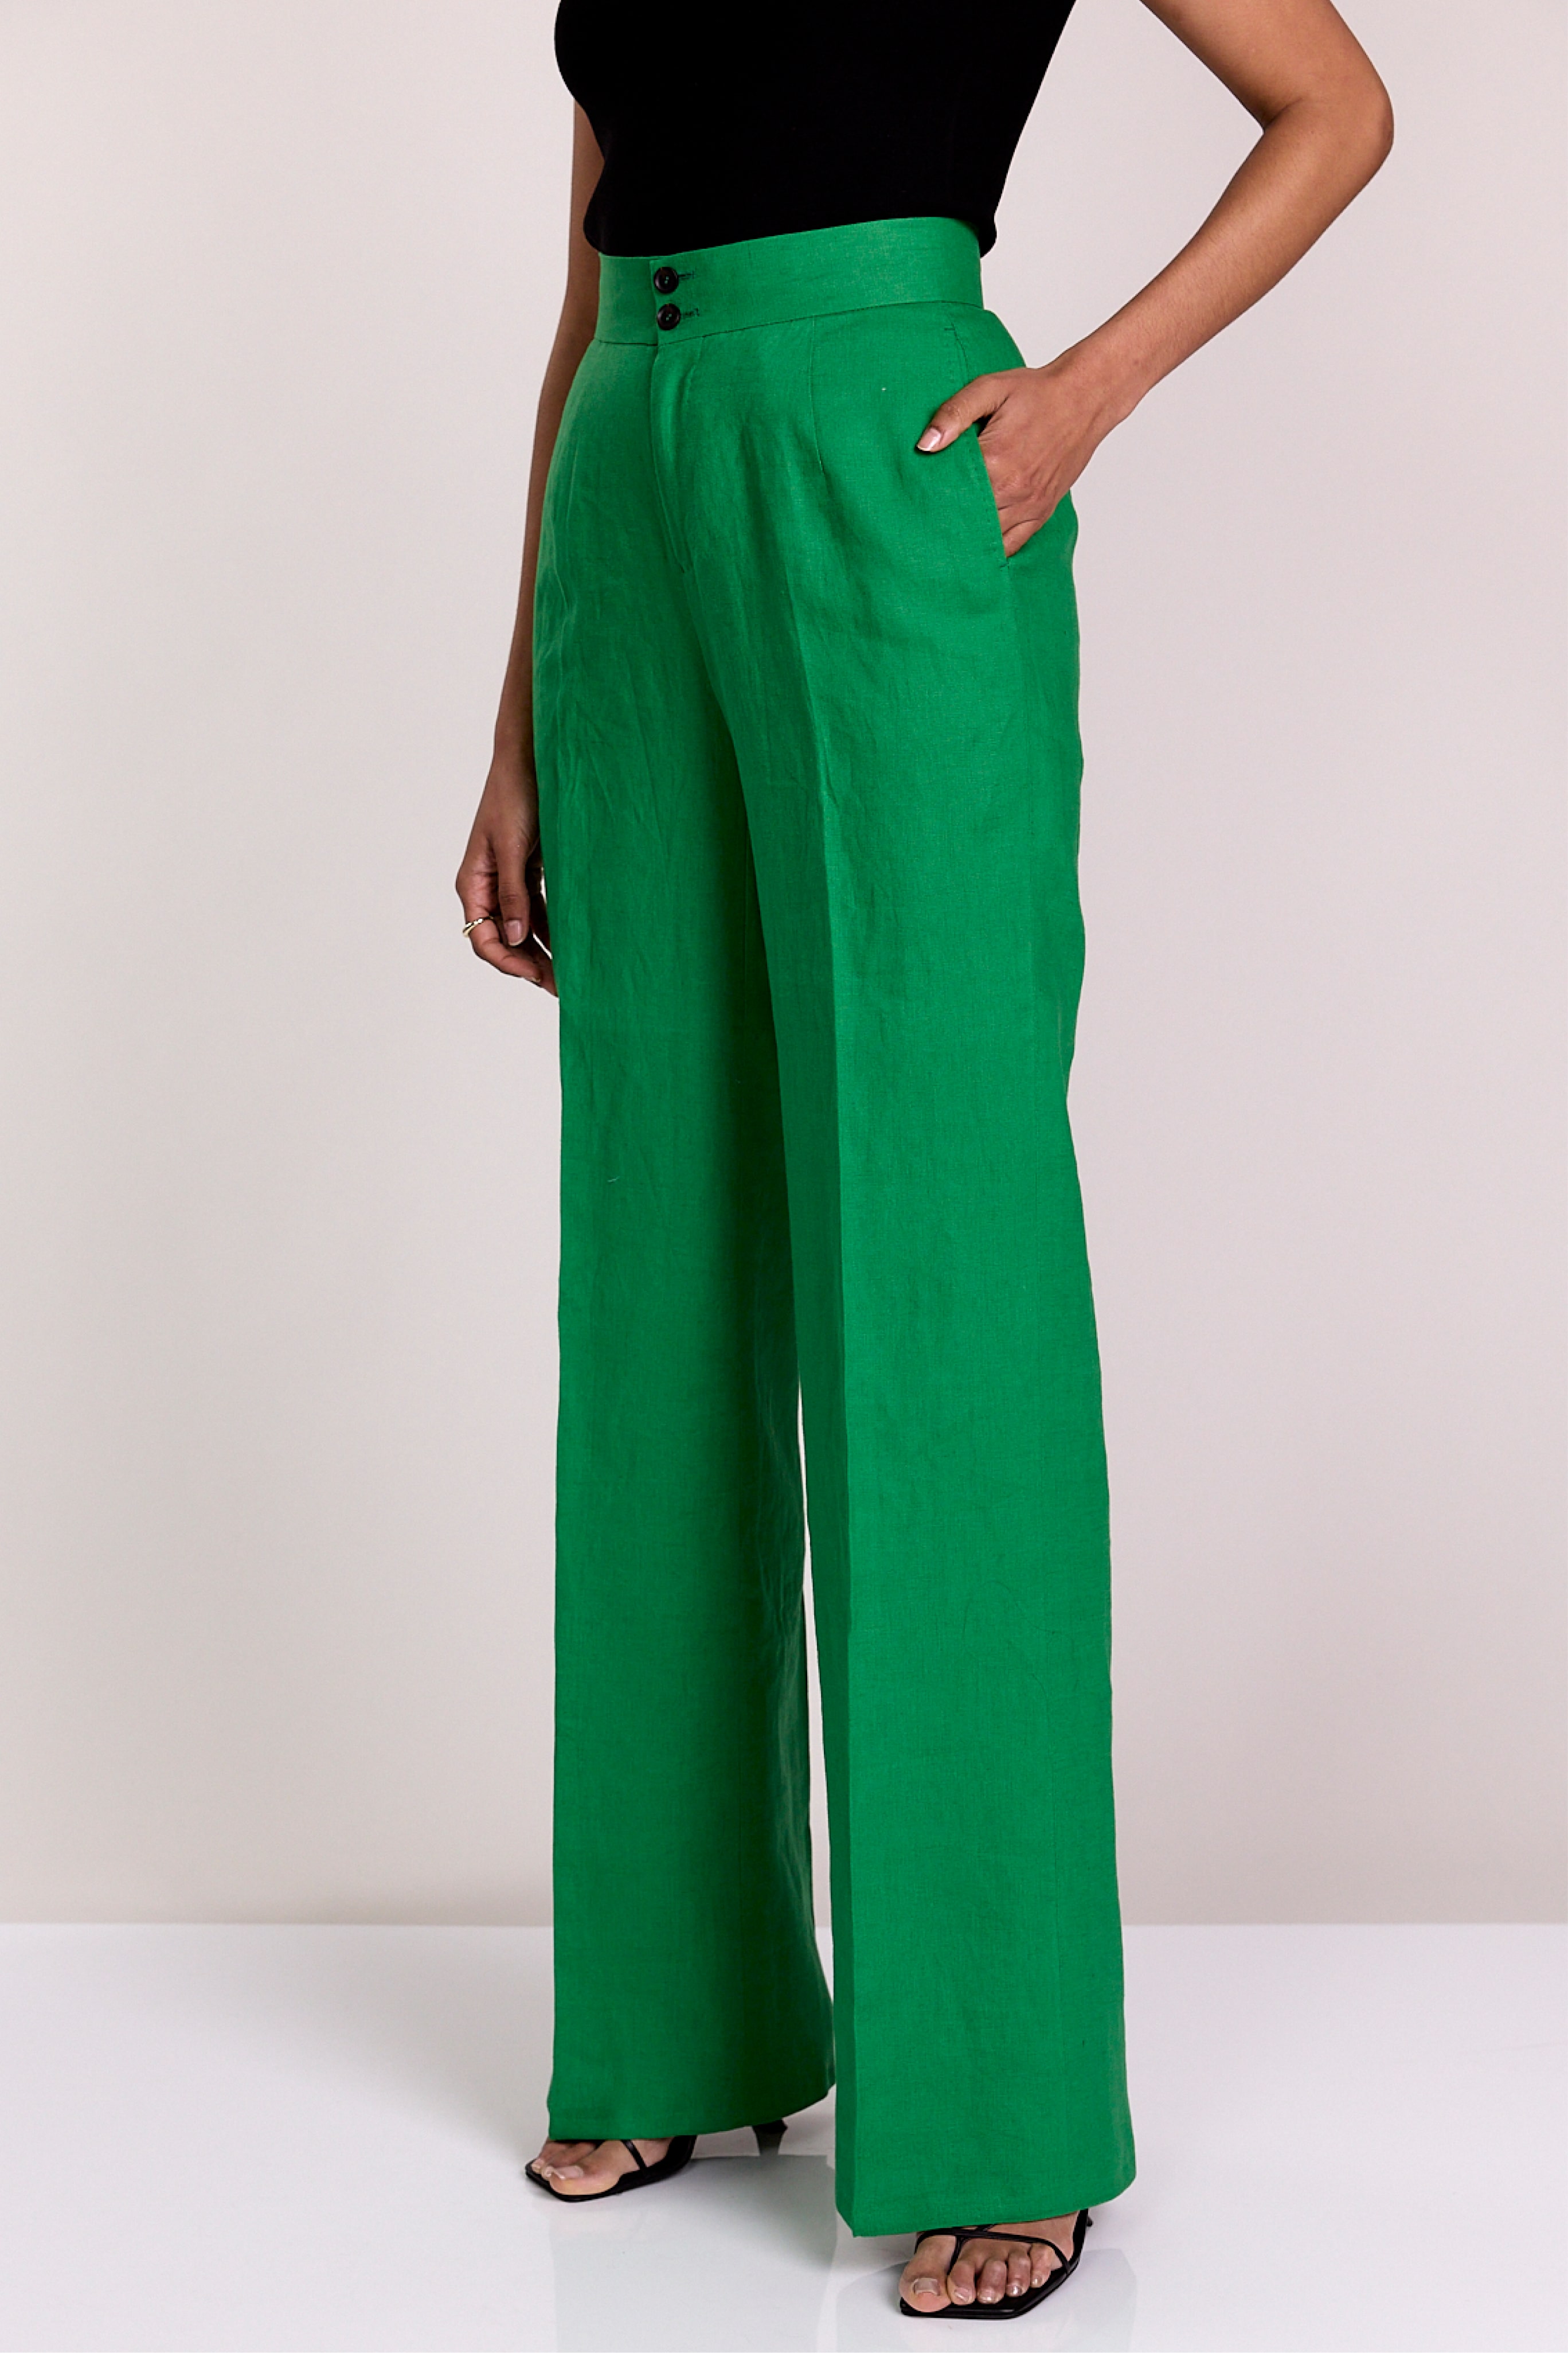 YYDGH Women's Velvet Pants High Waisted Flare Pants Solid Color Bell Bottom  Long Pants Trousers Dark Green Dark Green - Walmart.com